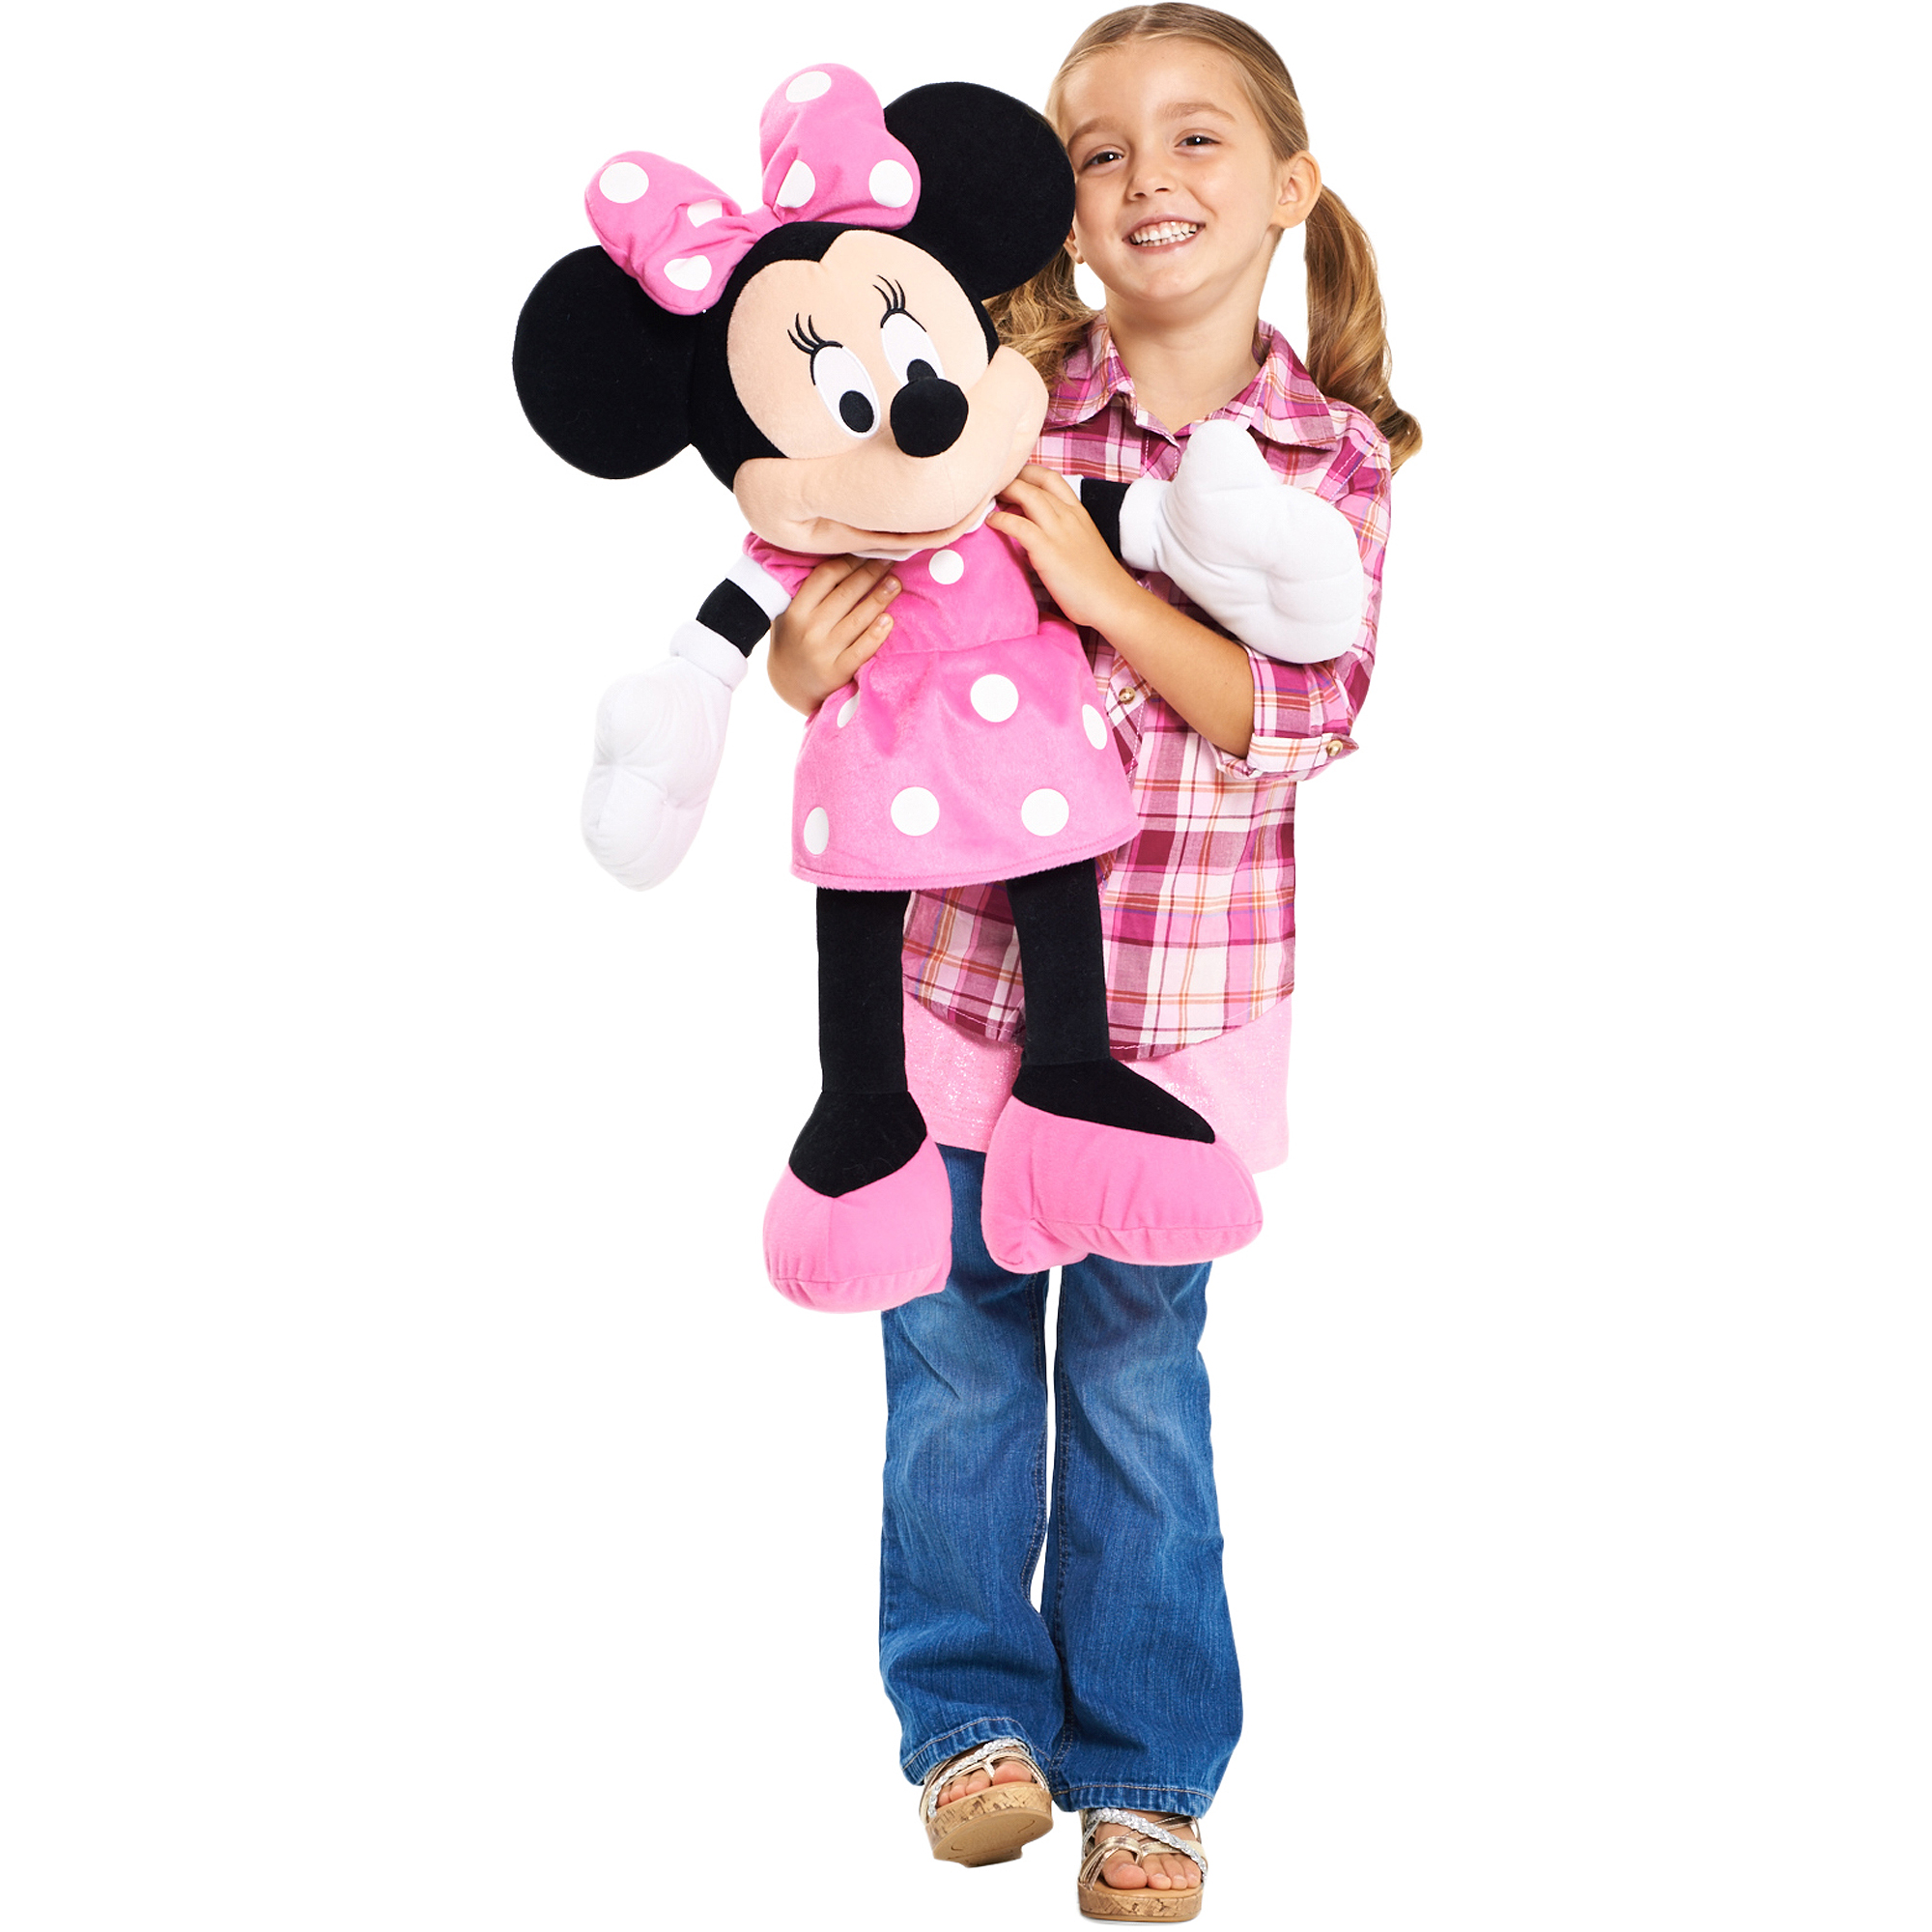 Disney Minnie Mouse Jumbo 28" Plush - image 1 of 2